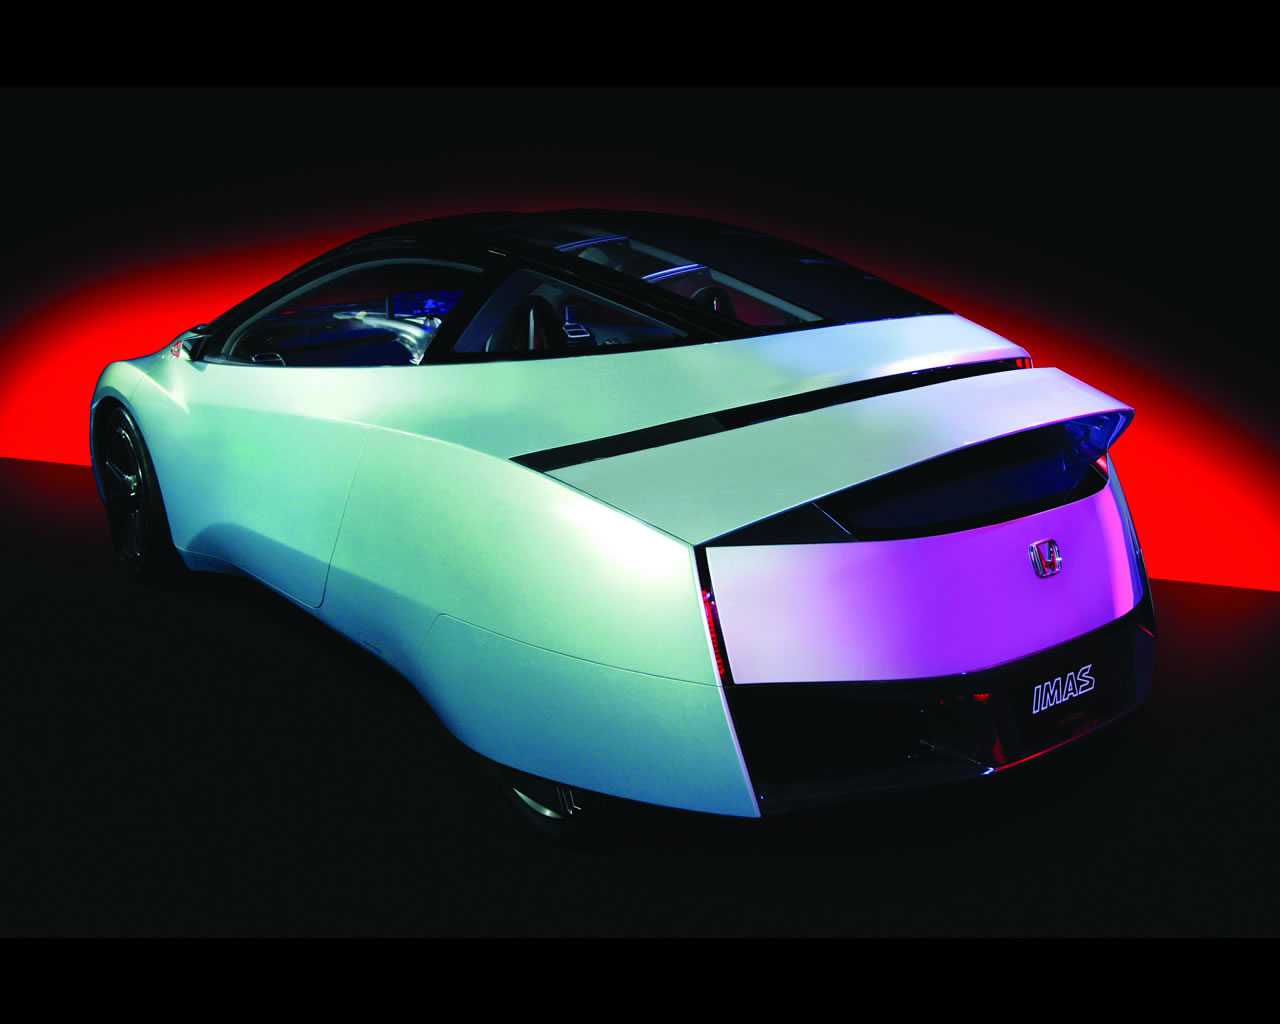 Honda imas concept car #4